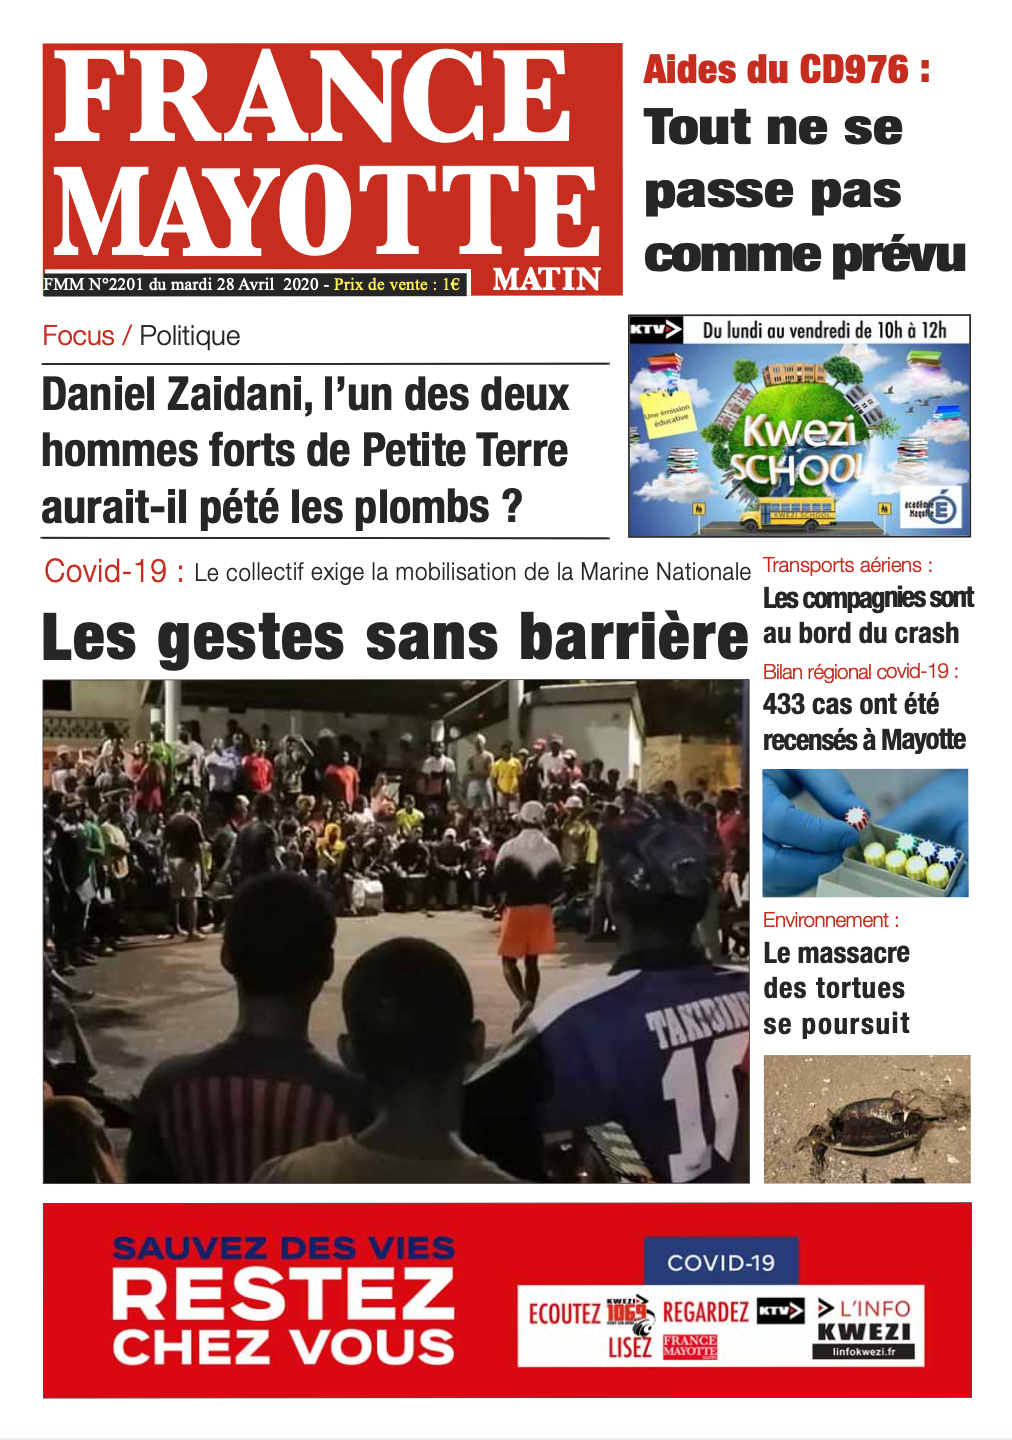 France Mayotte Mardi 28 avril 2020